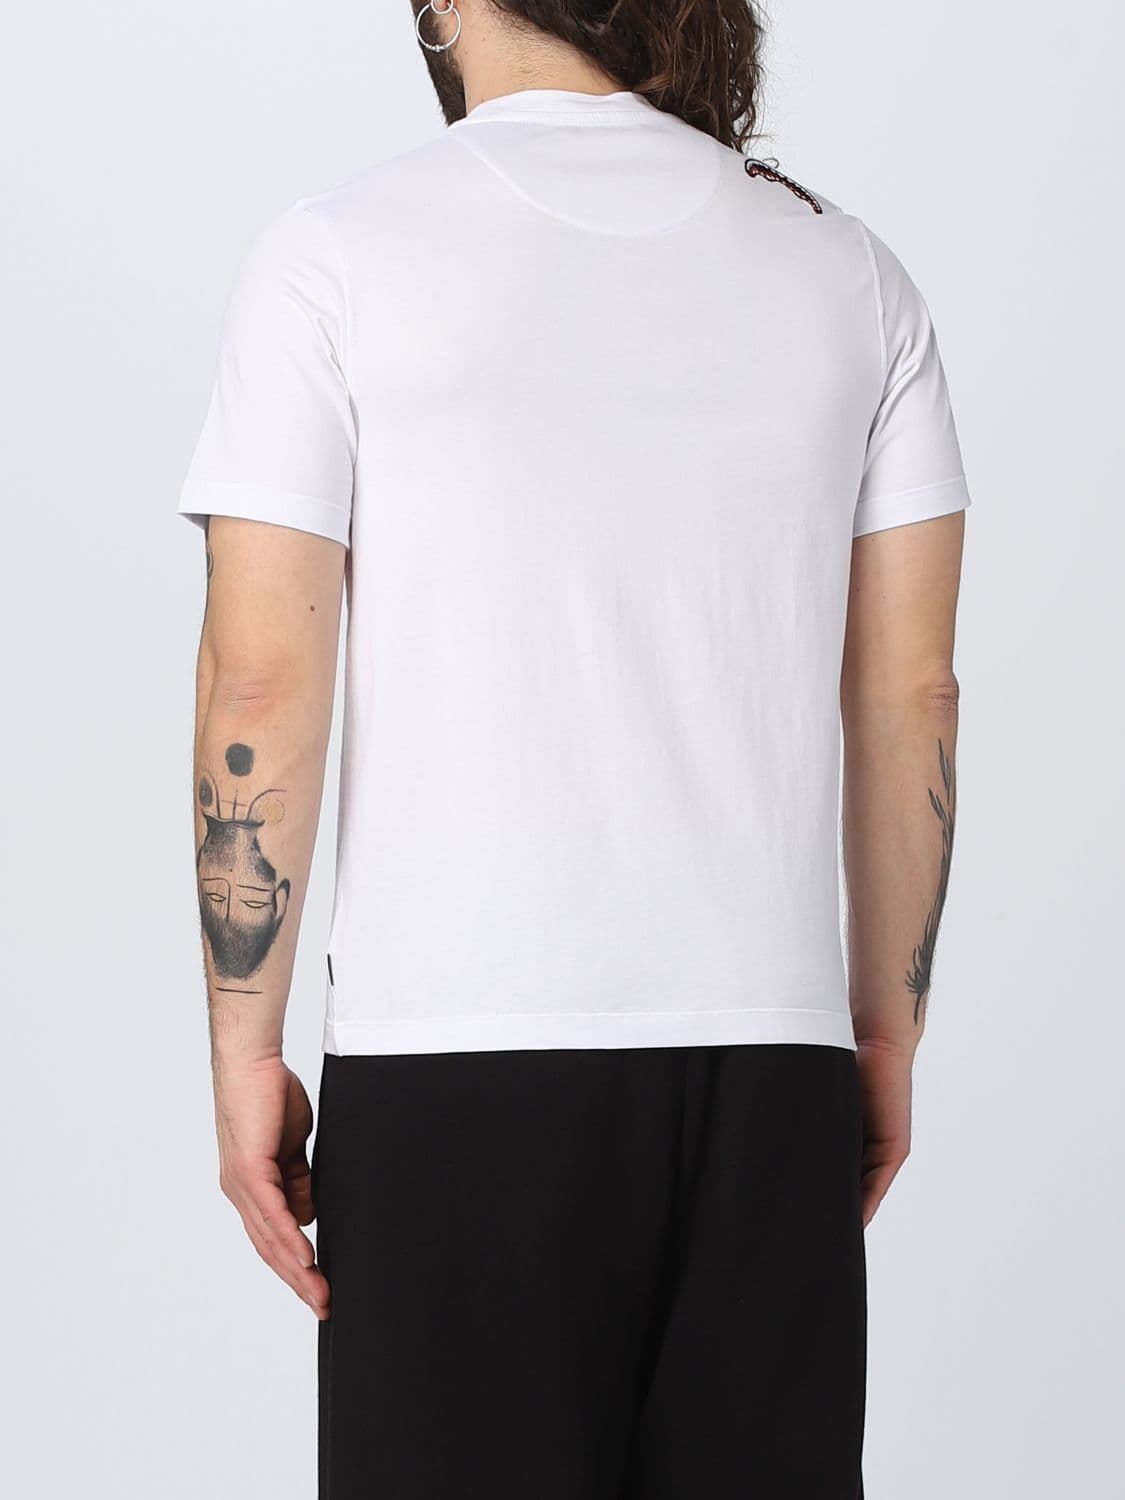 Camiseta SPRAYGROUND SP290WHT Loose smooth white - Imagen 2